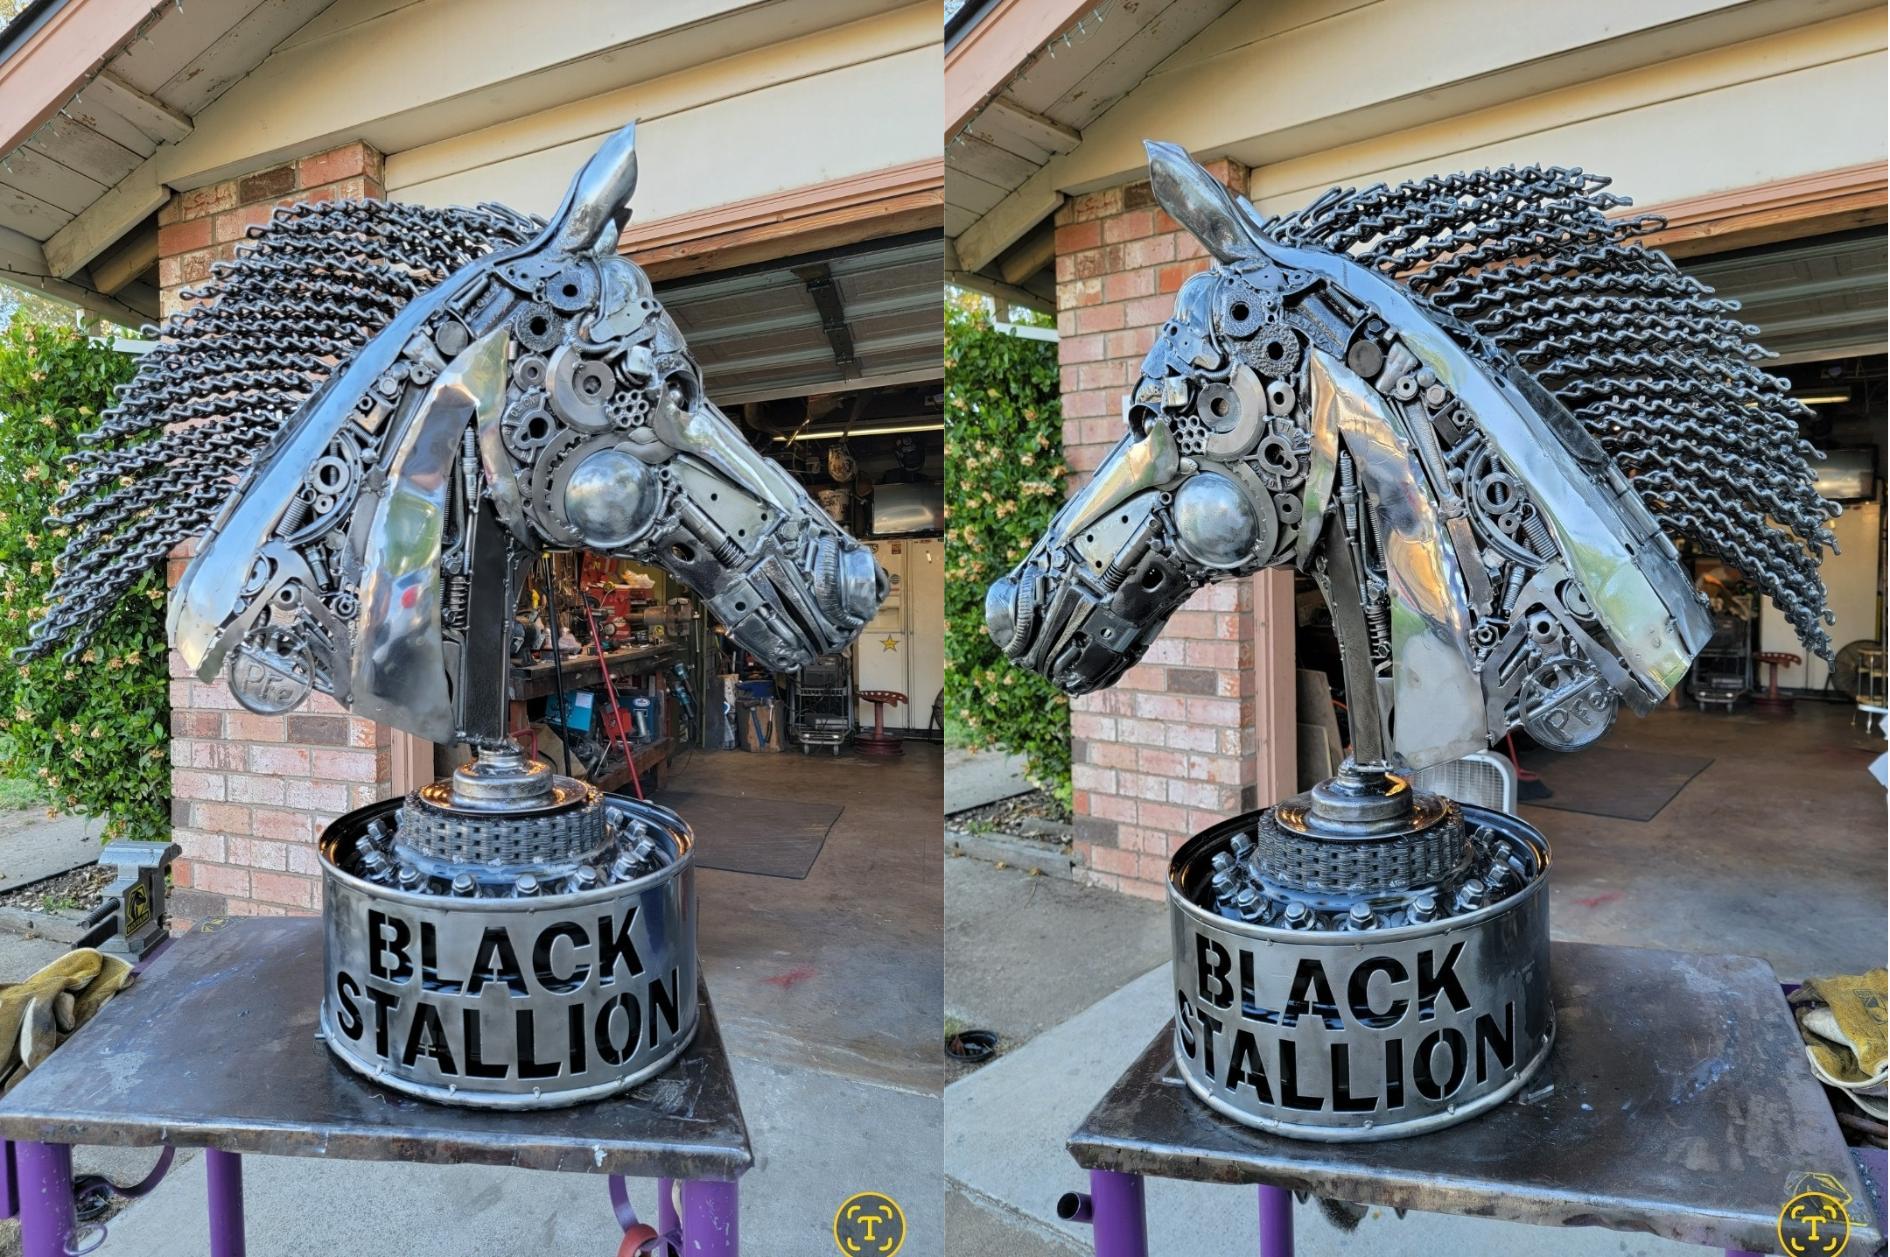 Horse art - "Black Stallion" scrap metal art sculpture created by metal artist PJ Kennedy aka PFe works